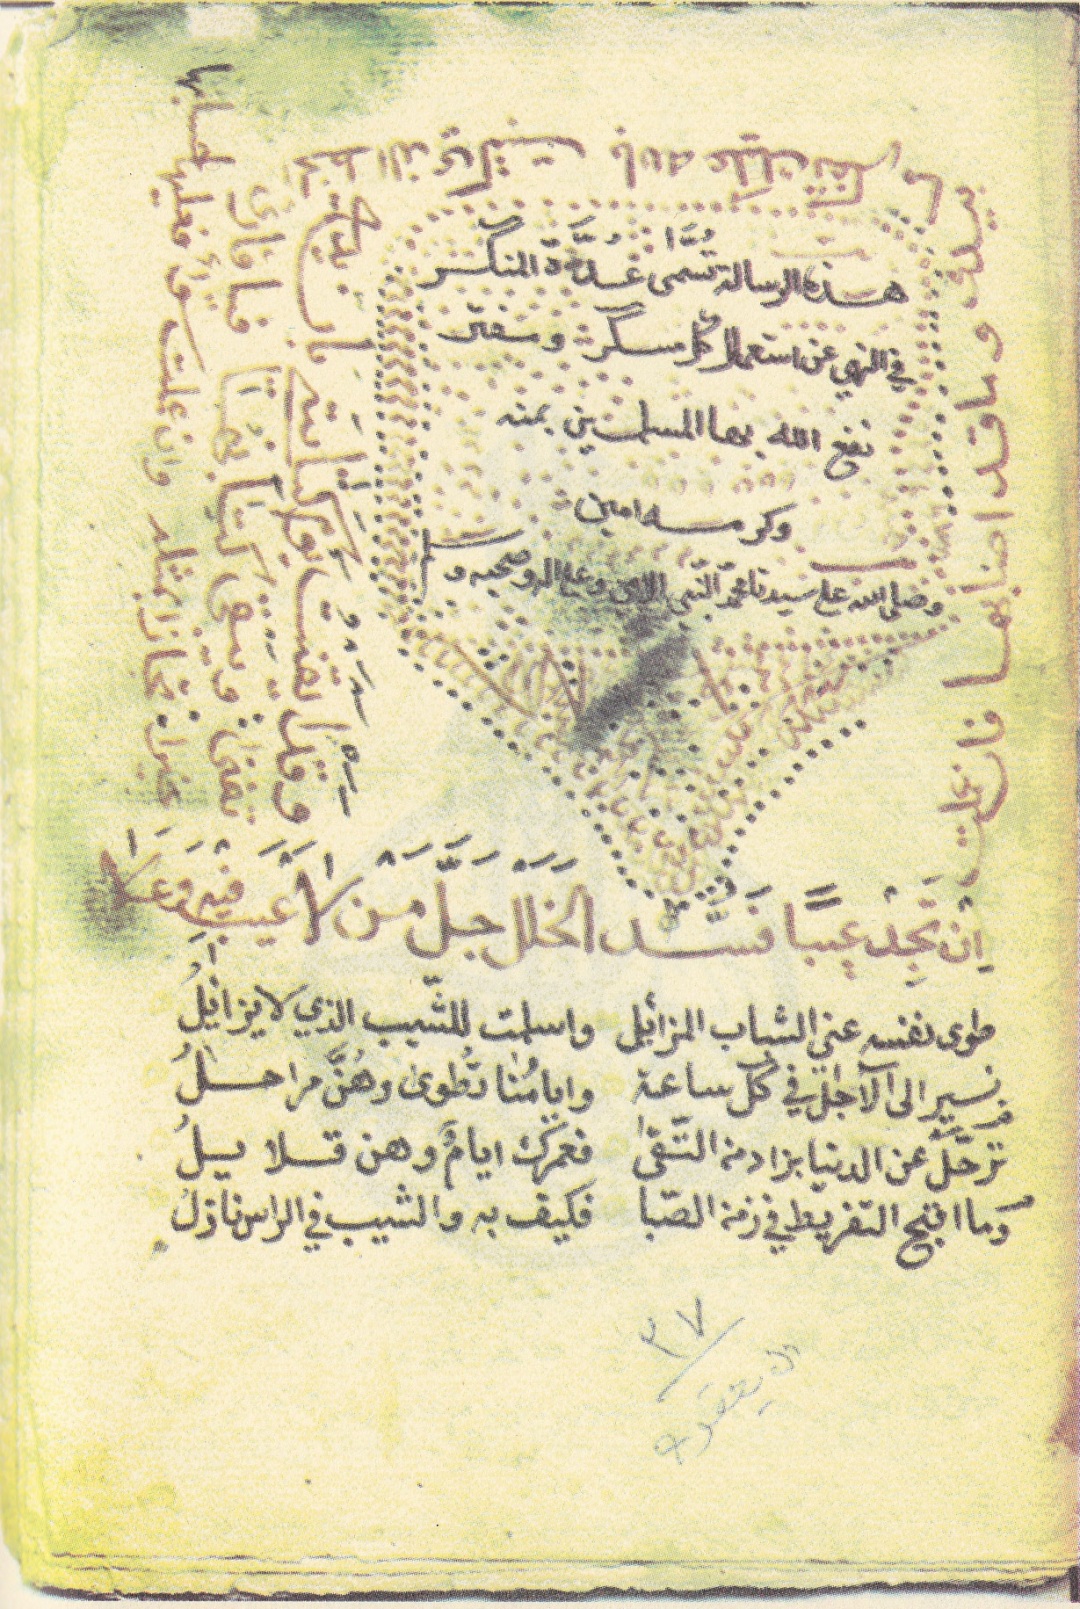 iddat_almunkir_manuscript1